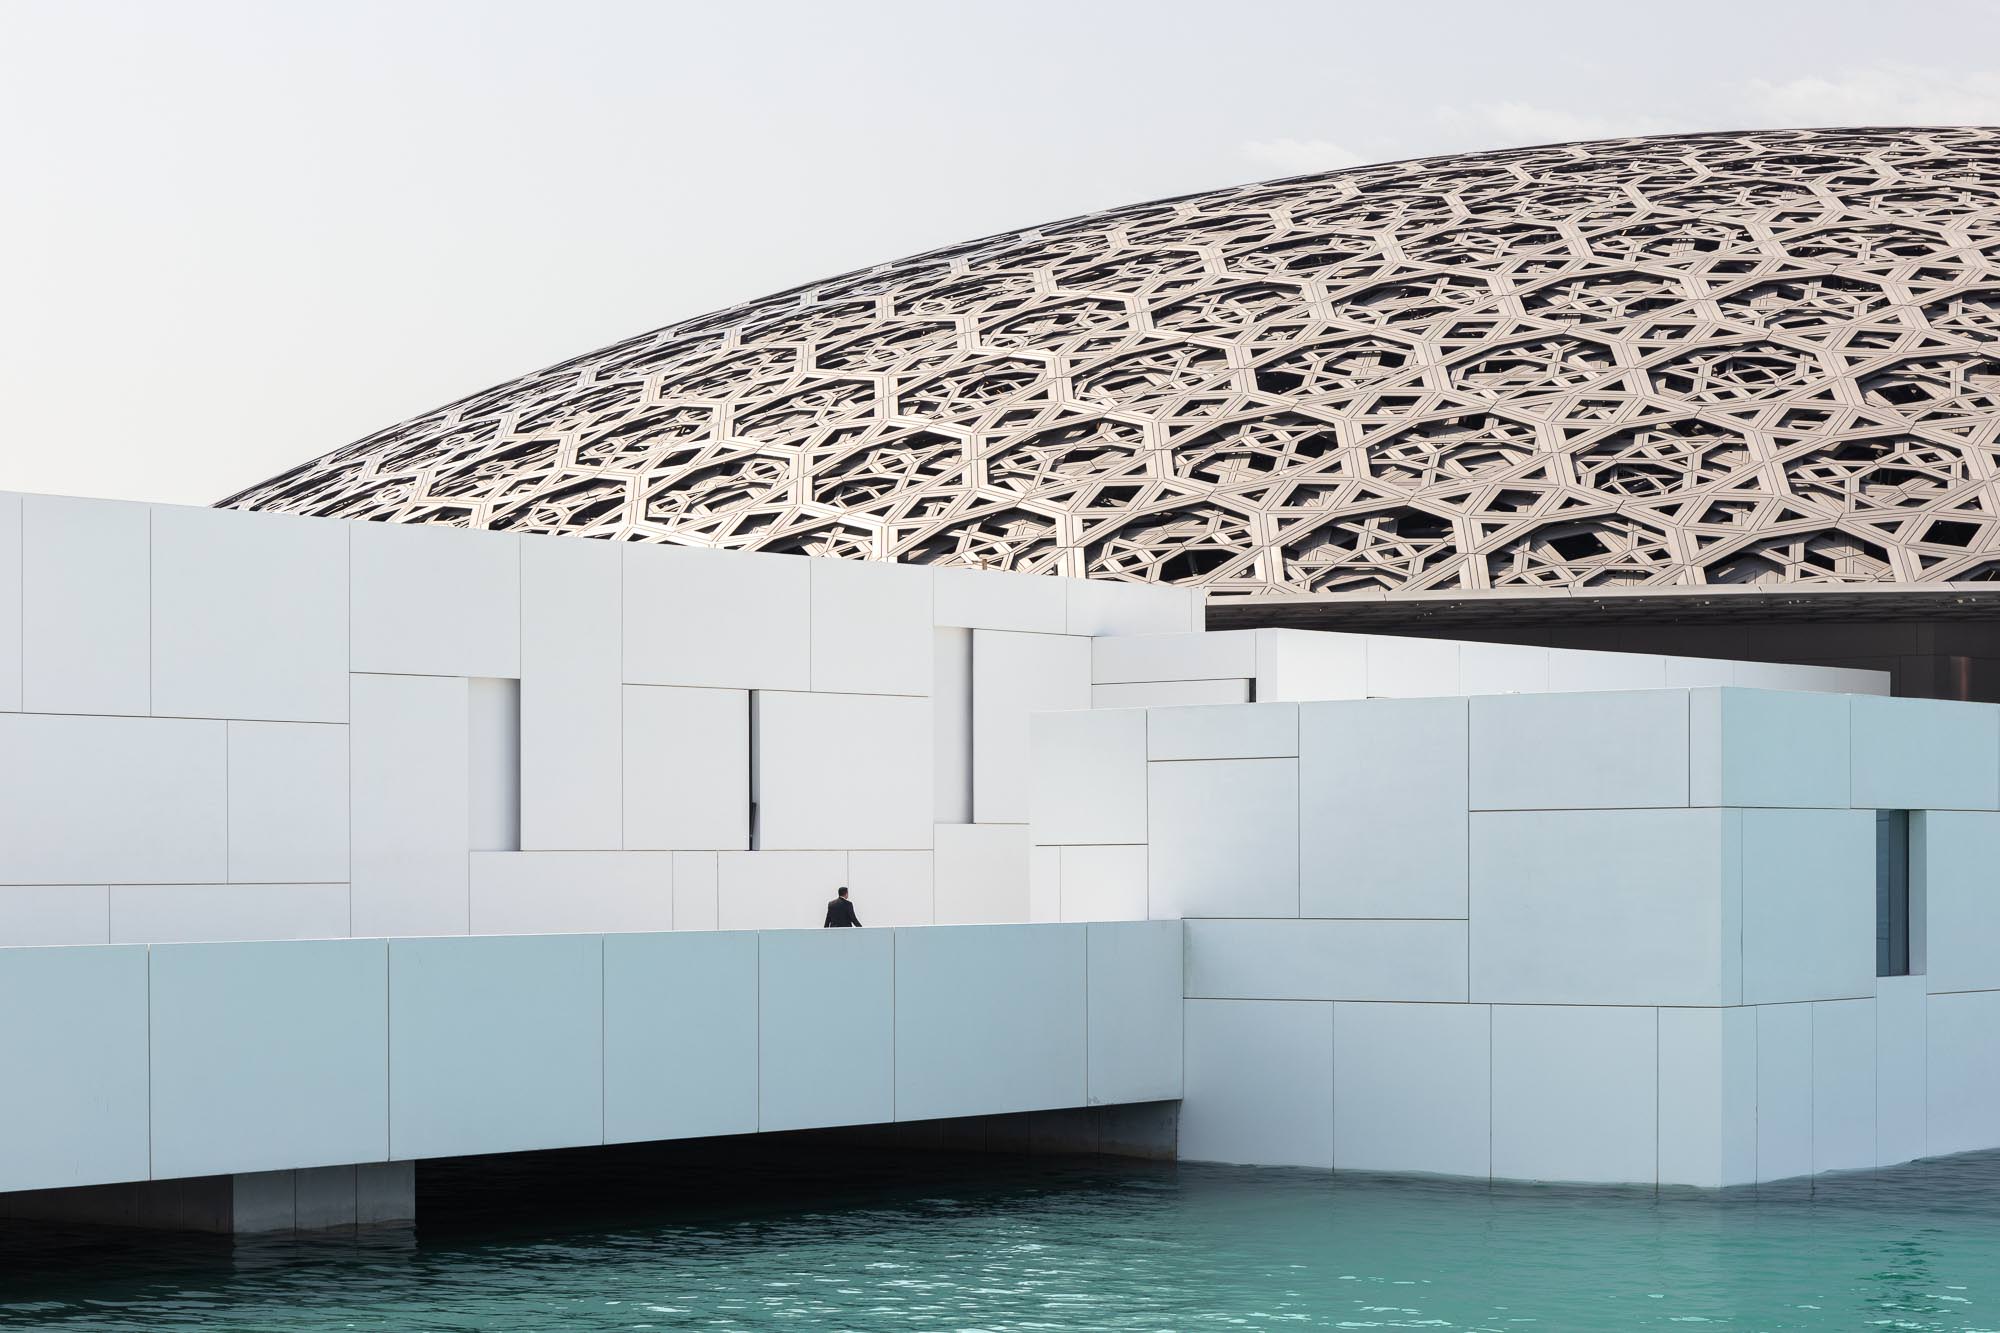 Louvre Abu Dhabi, Abu Dhabi, UAE - Ateliers Jean Nouvel